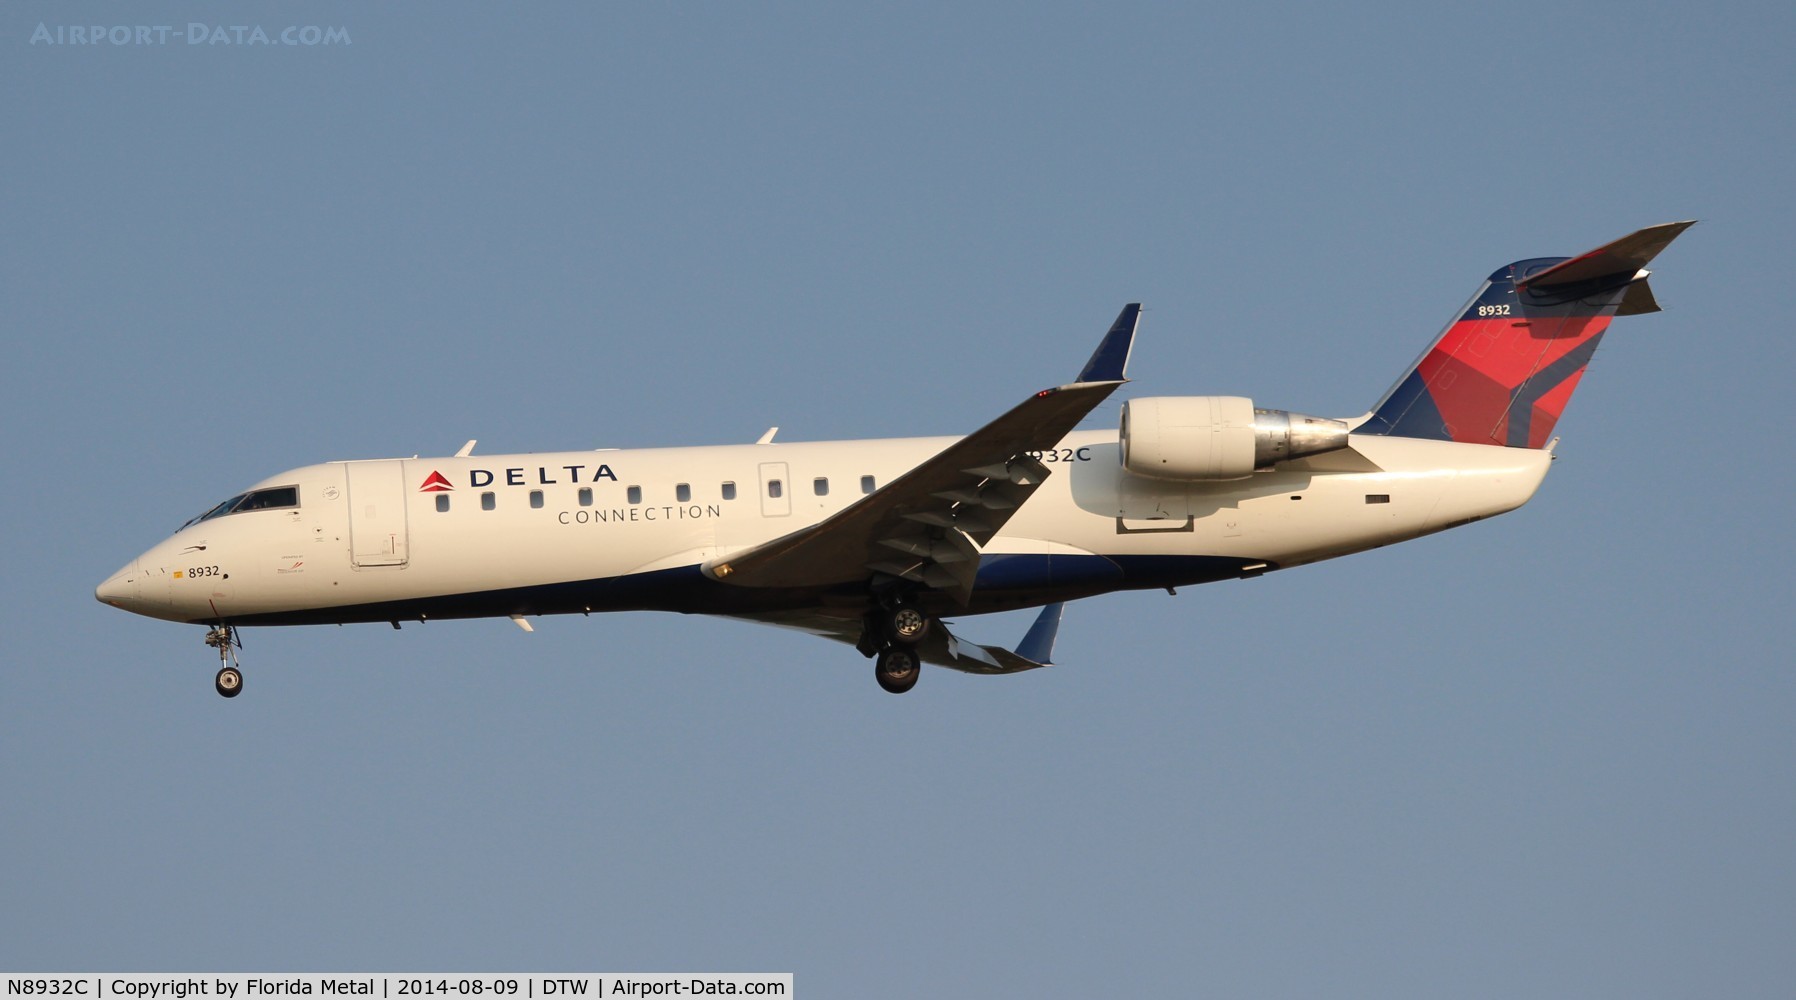 N8932C, 2004 Bombardier CRJ-200 (CL-600-2B19) C/N 7932, Delta Connection